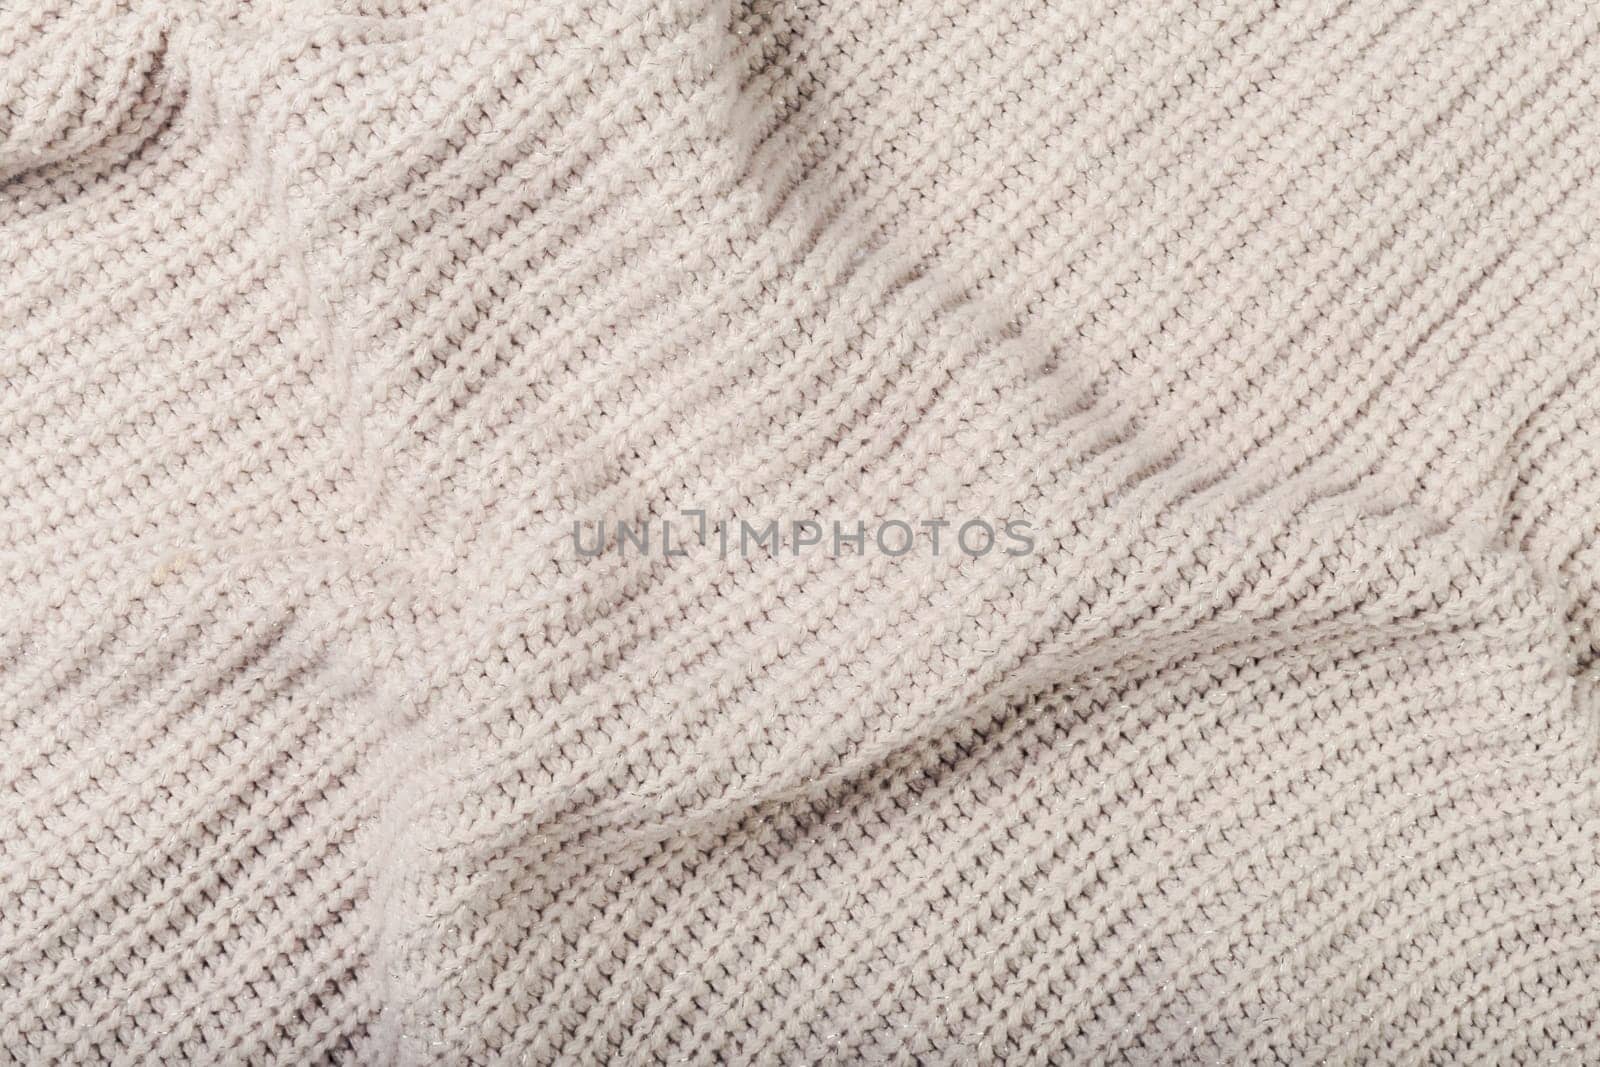 Sweater Texture by Fabrikasimf